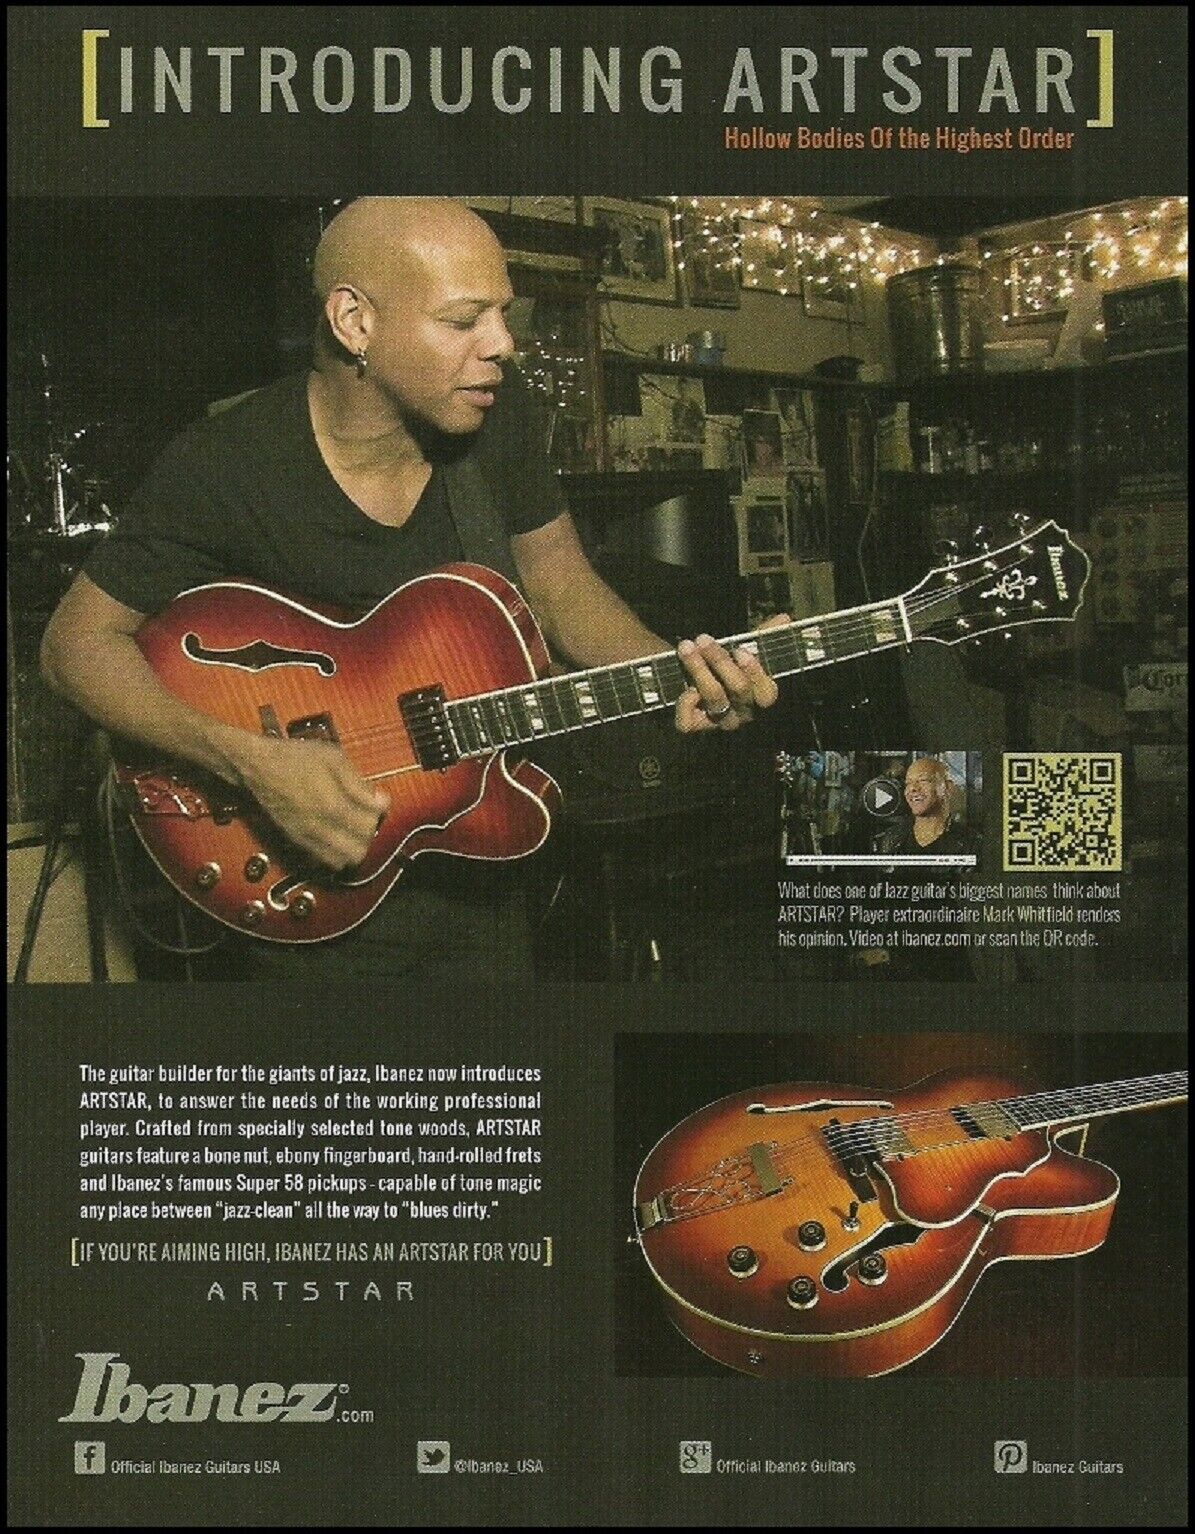 Mark Whitfield Ibanez Artstar Guitar Series ad 8 x 11 advertisement print